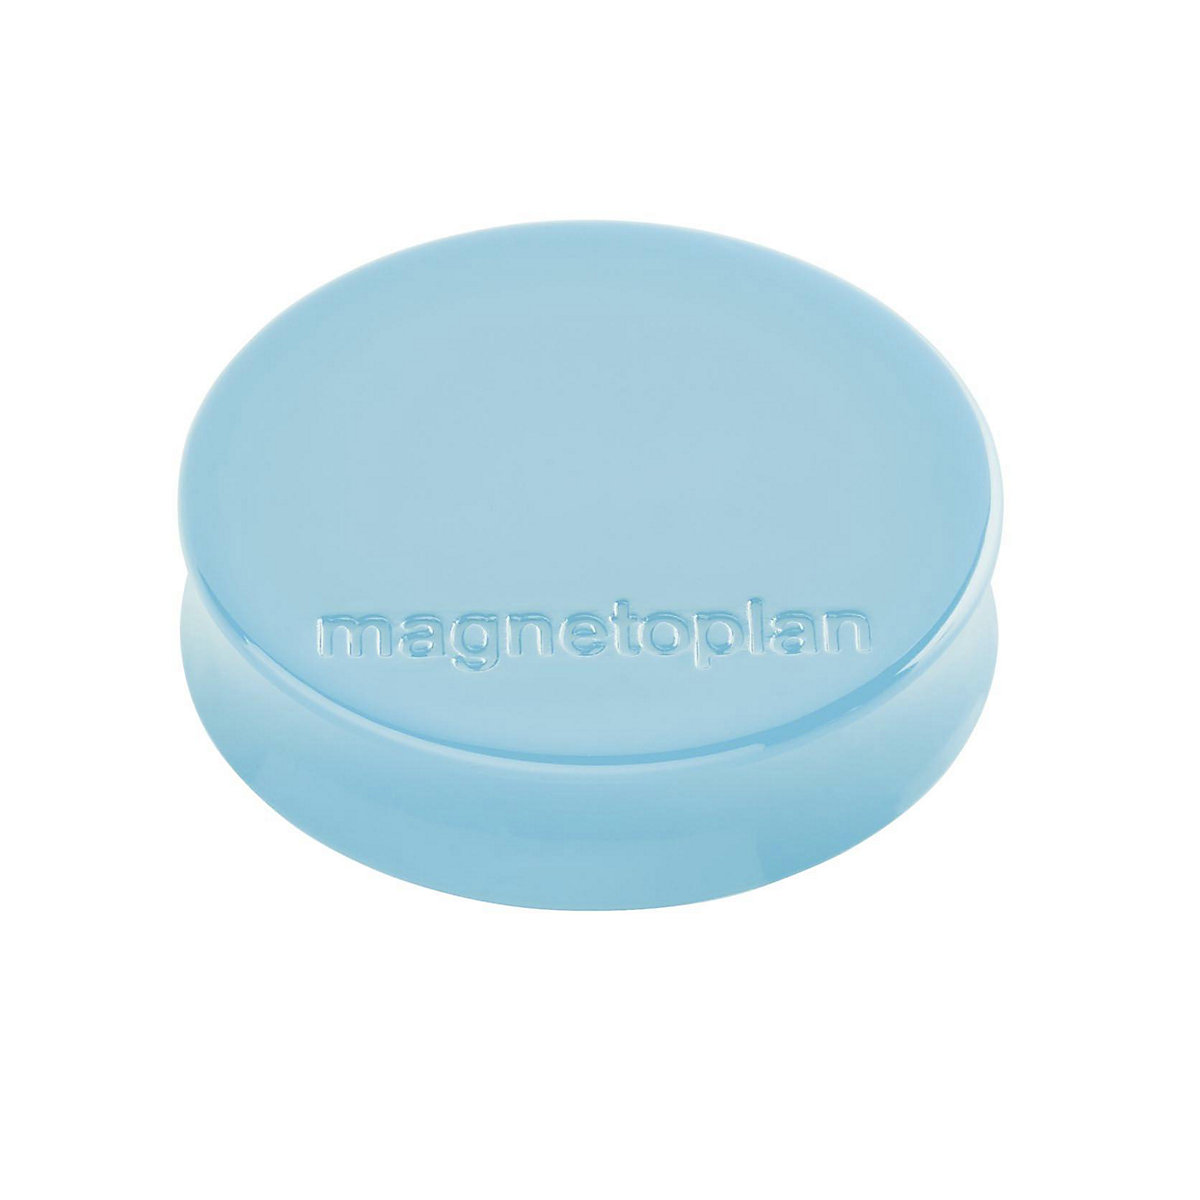 Plot magnétique Ergo – magnetoplan, Ø 30 mm, lot de 60, bleu bébé